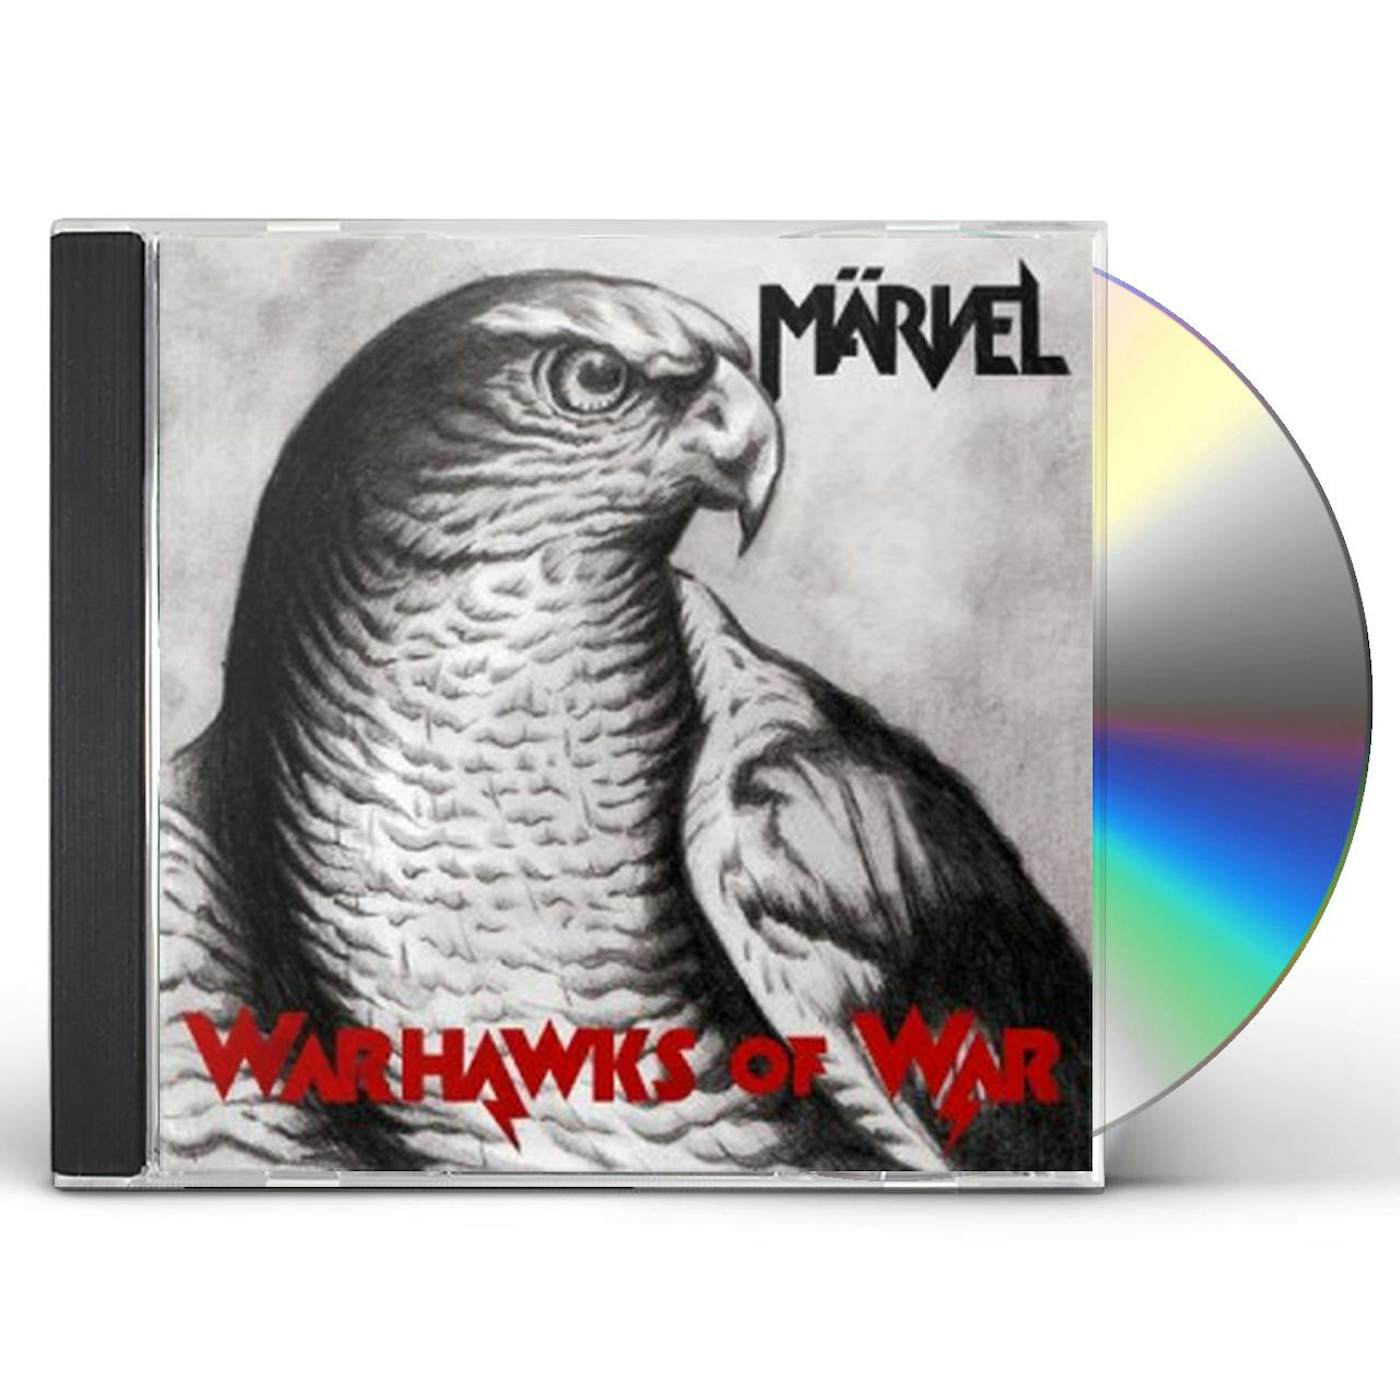 Marvel WARHAWKS OF WAR CD